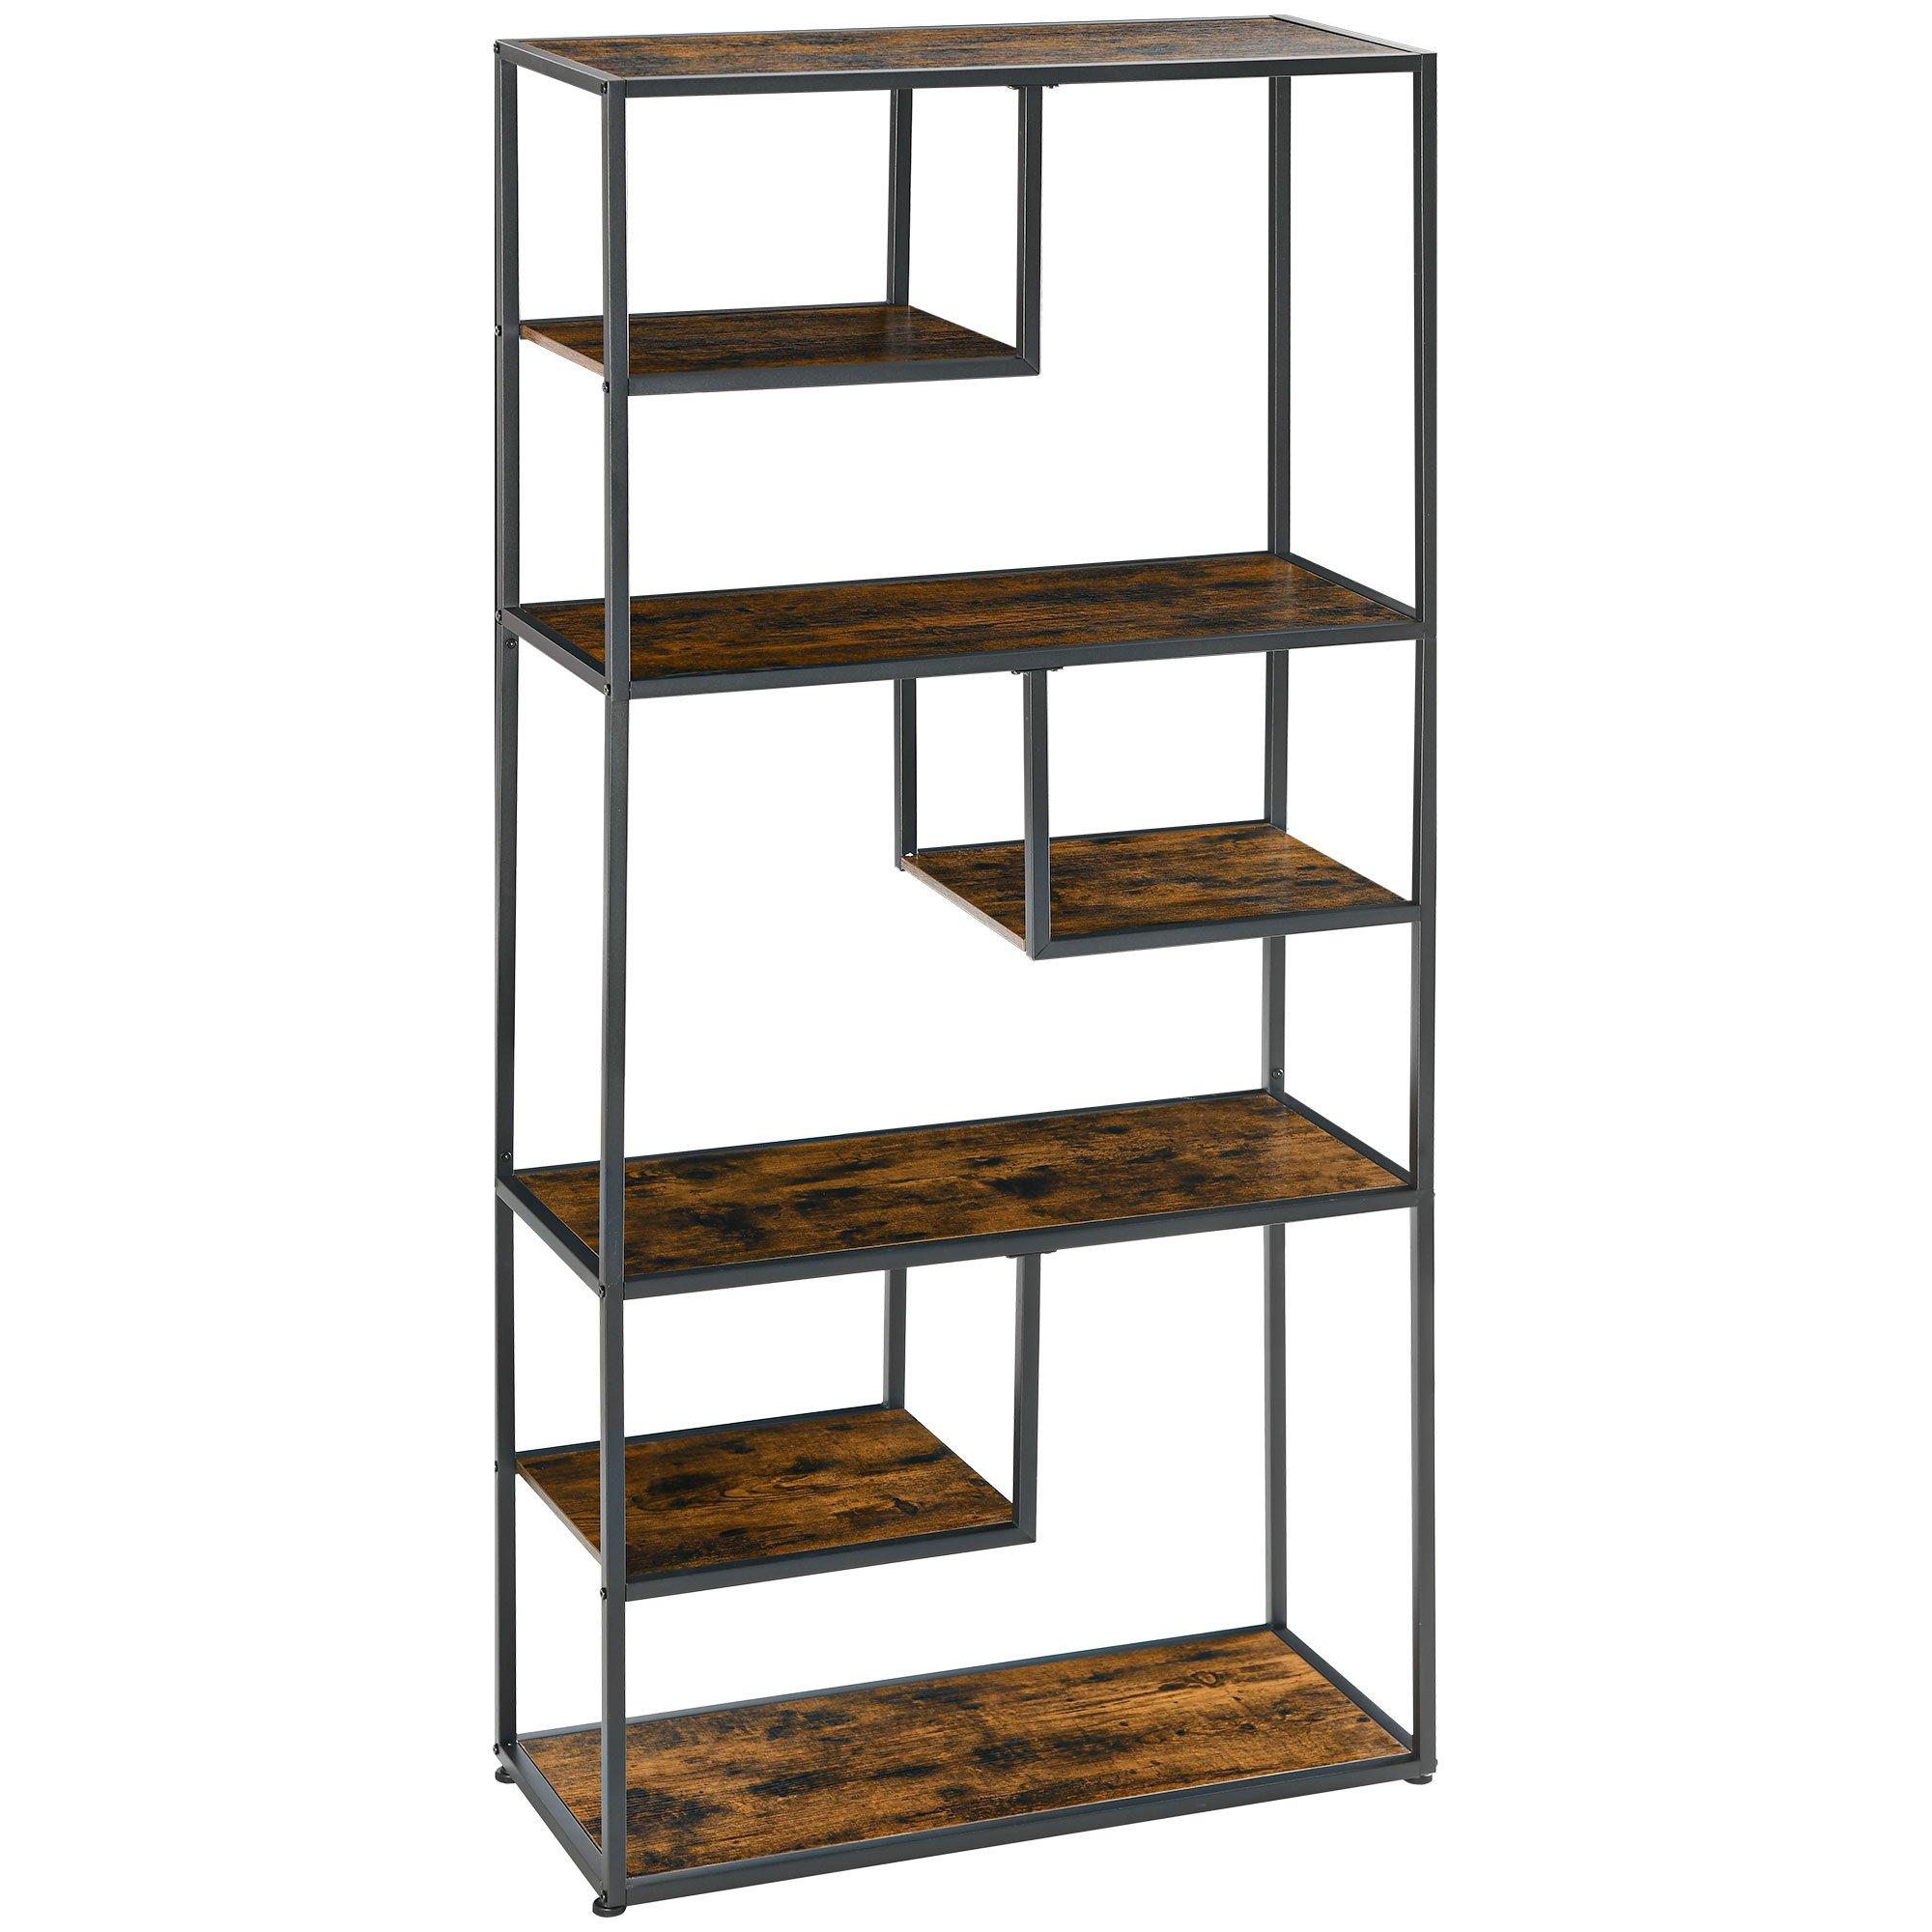 Industrial Ladder Shelf 7 Tier Bookshelf Display Rack for Living Room